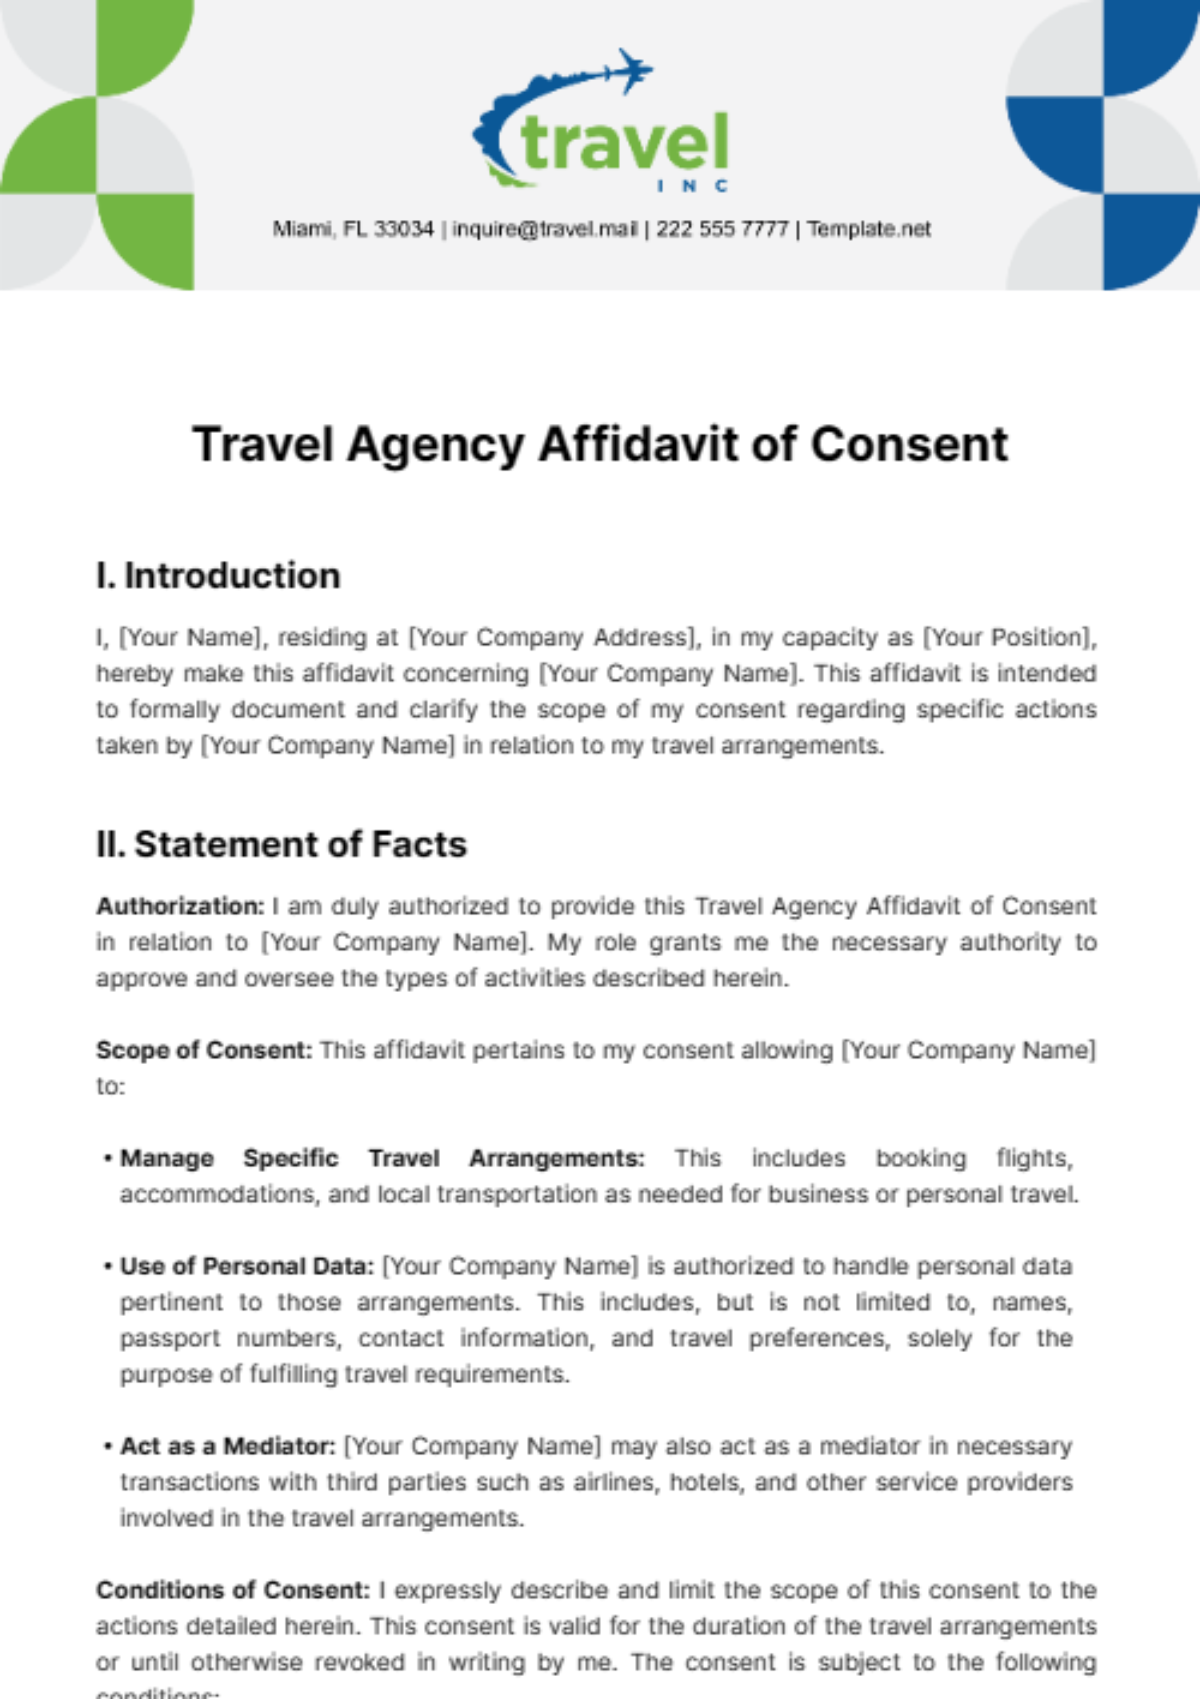 Travel Agency Affidavit of Consent Template